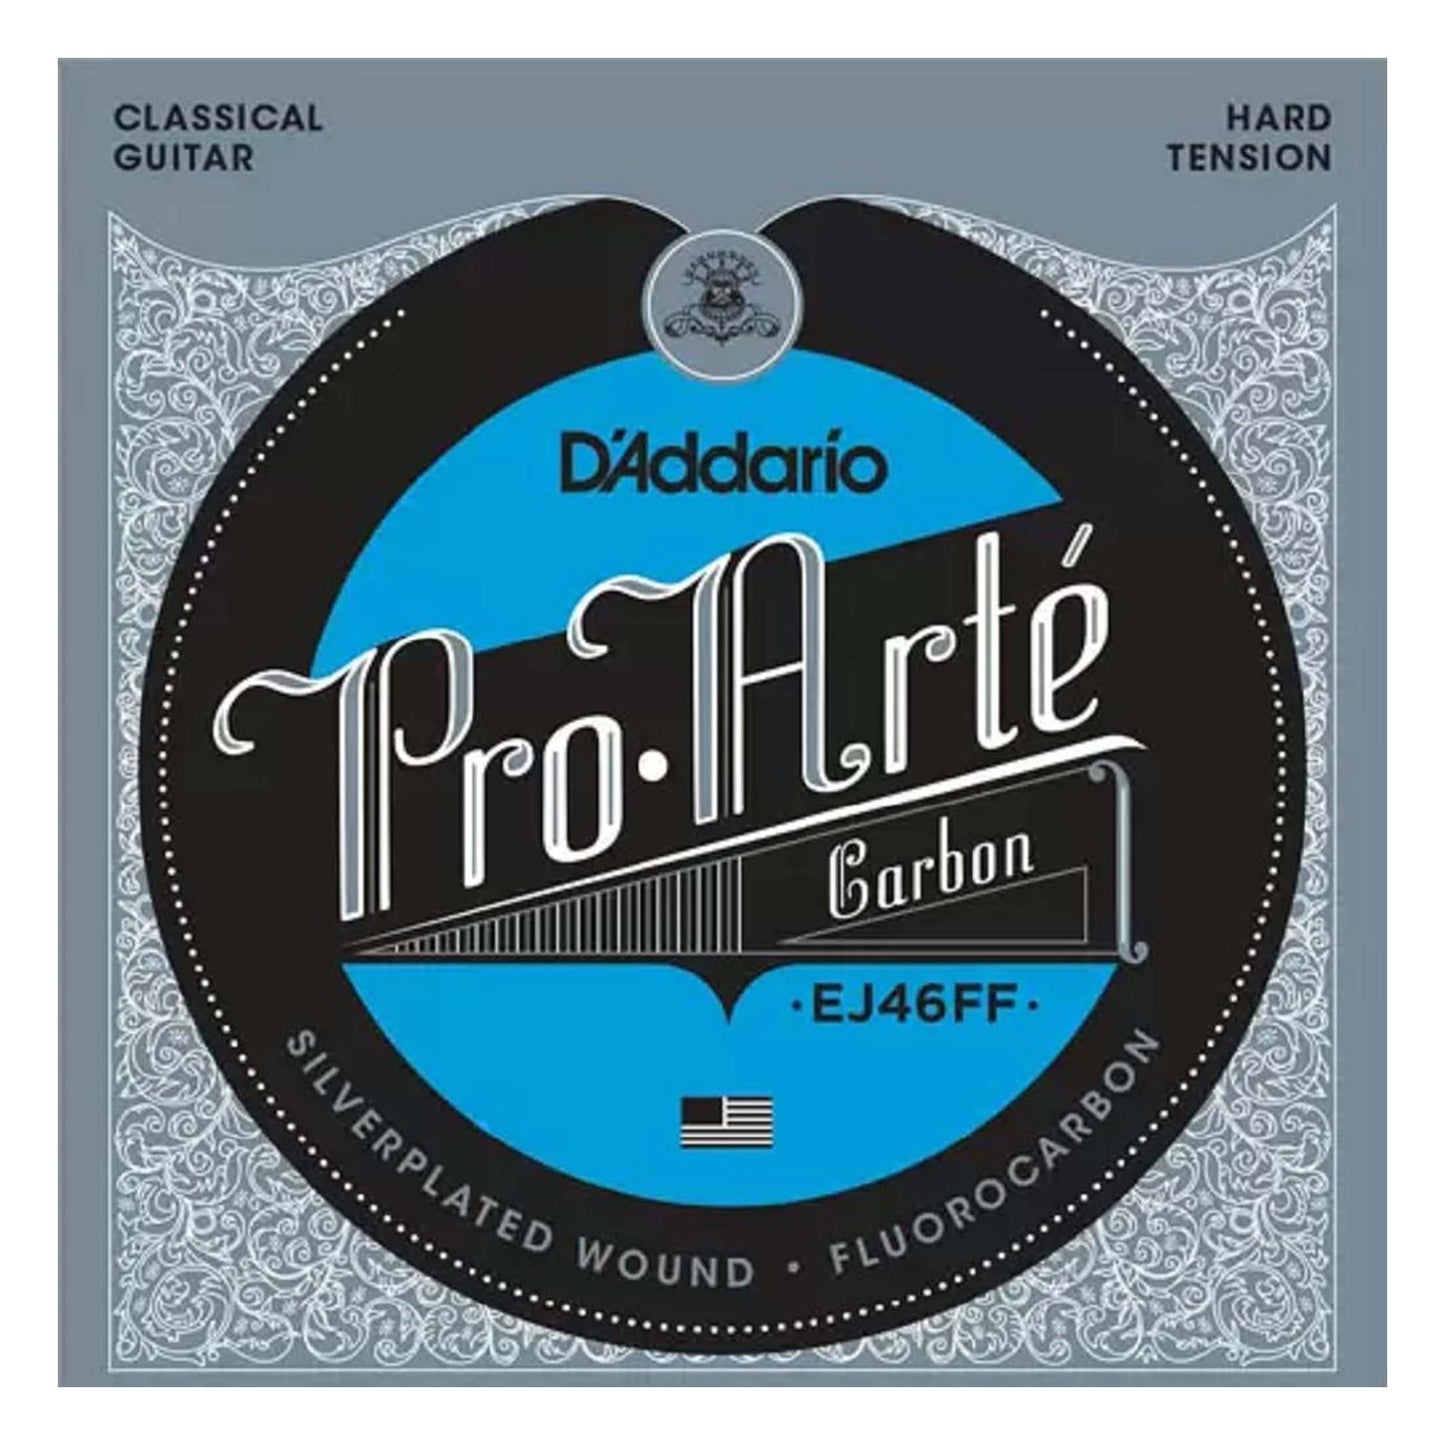 D'Addario EJ46FF ProArte Carbon Classical Guitar Strings, Hard Tension